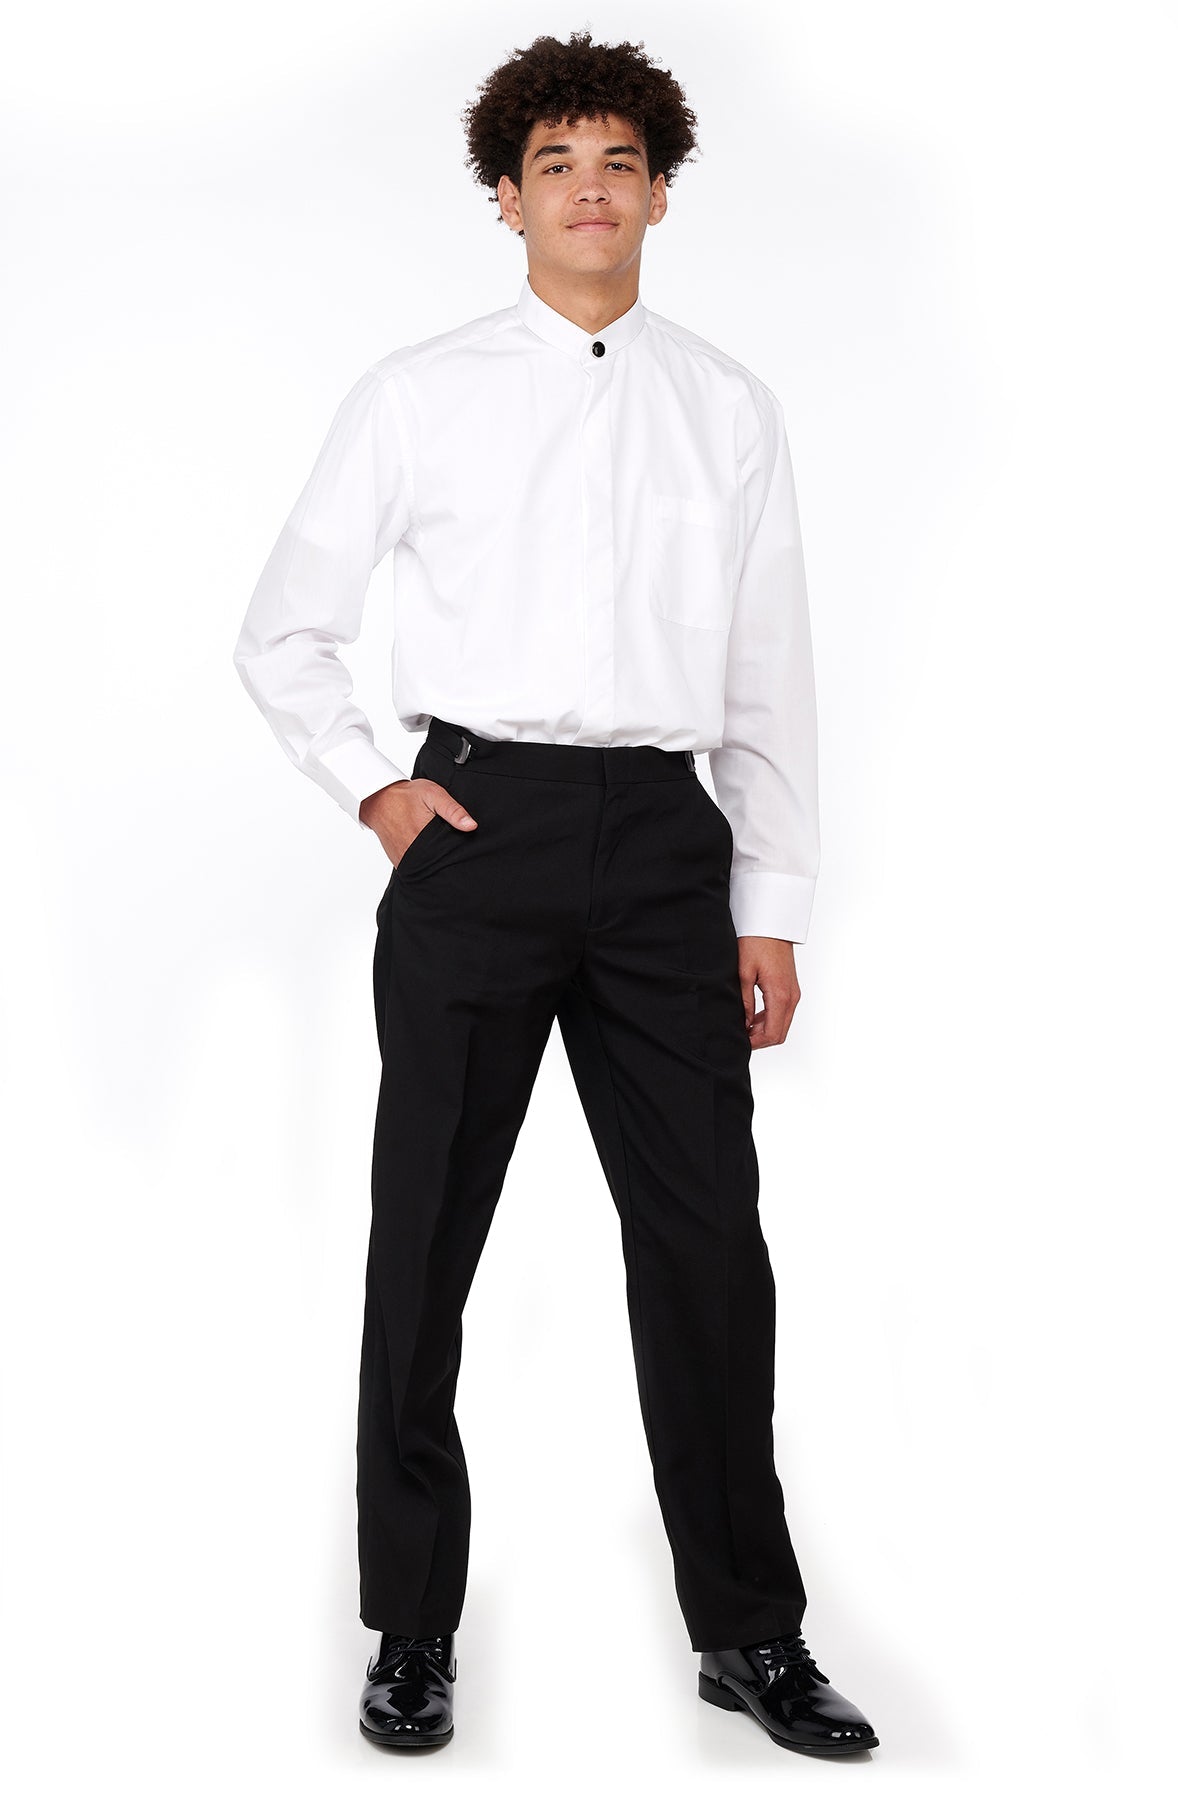 770 - White Mandarin Collar Non-Pleated Shirt